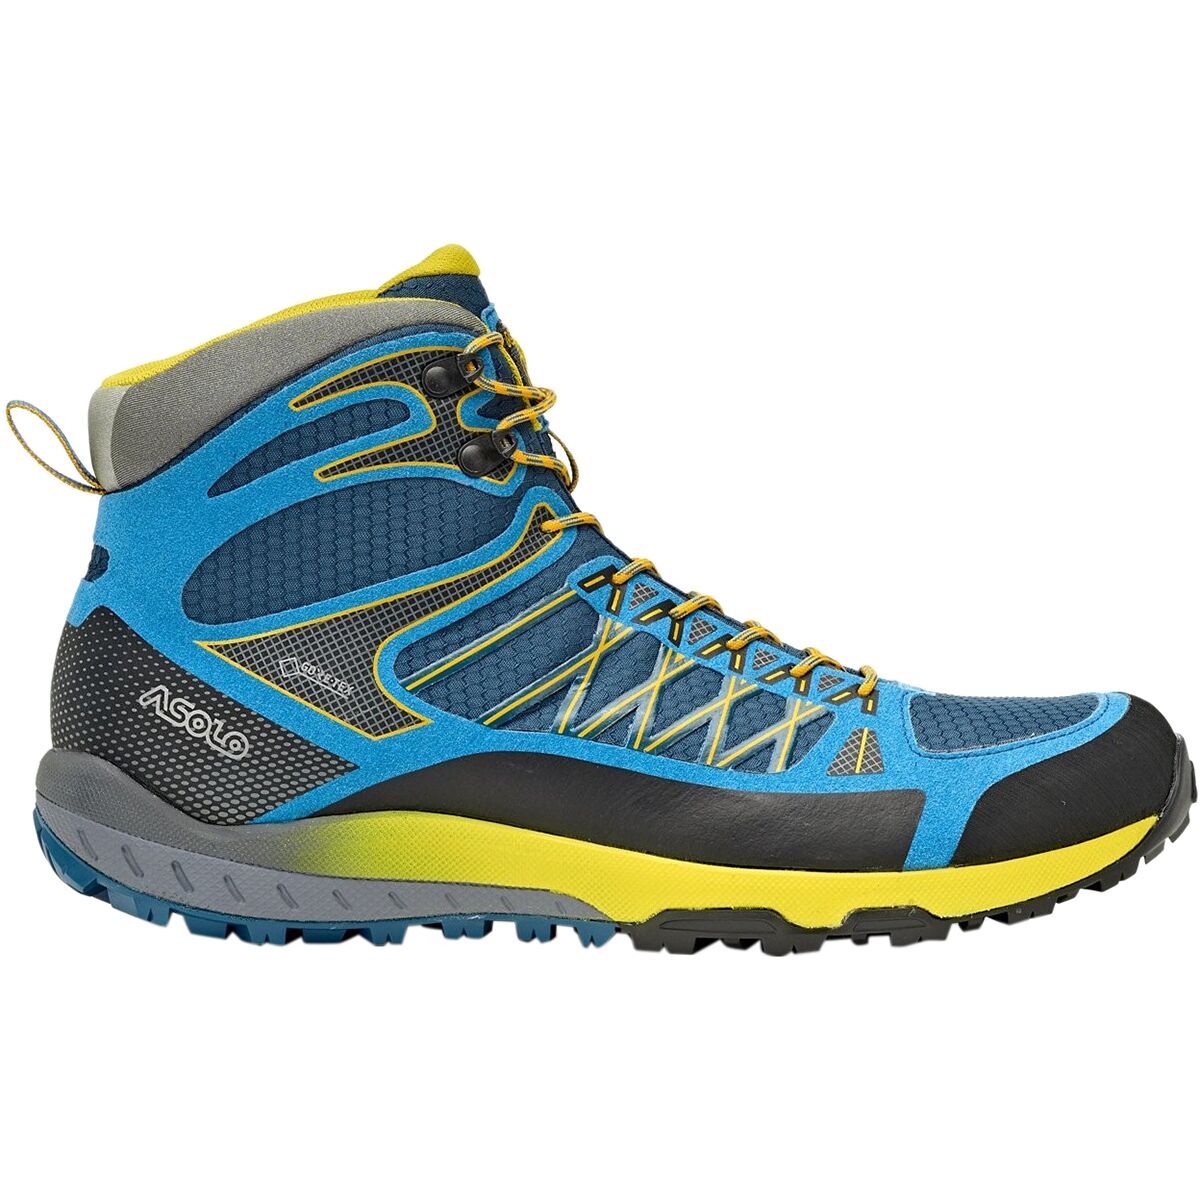 Asolo Grid Mid GV Hiking Boot - Men's